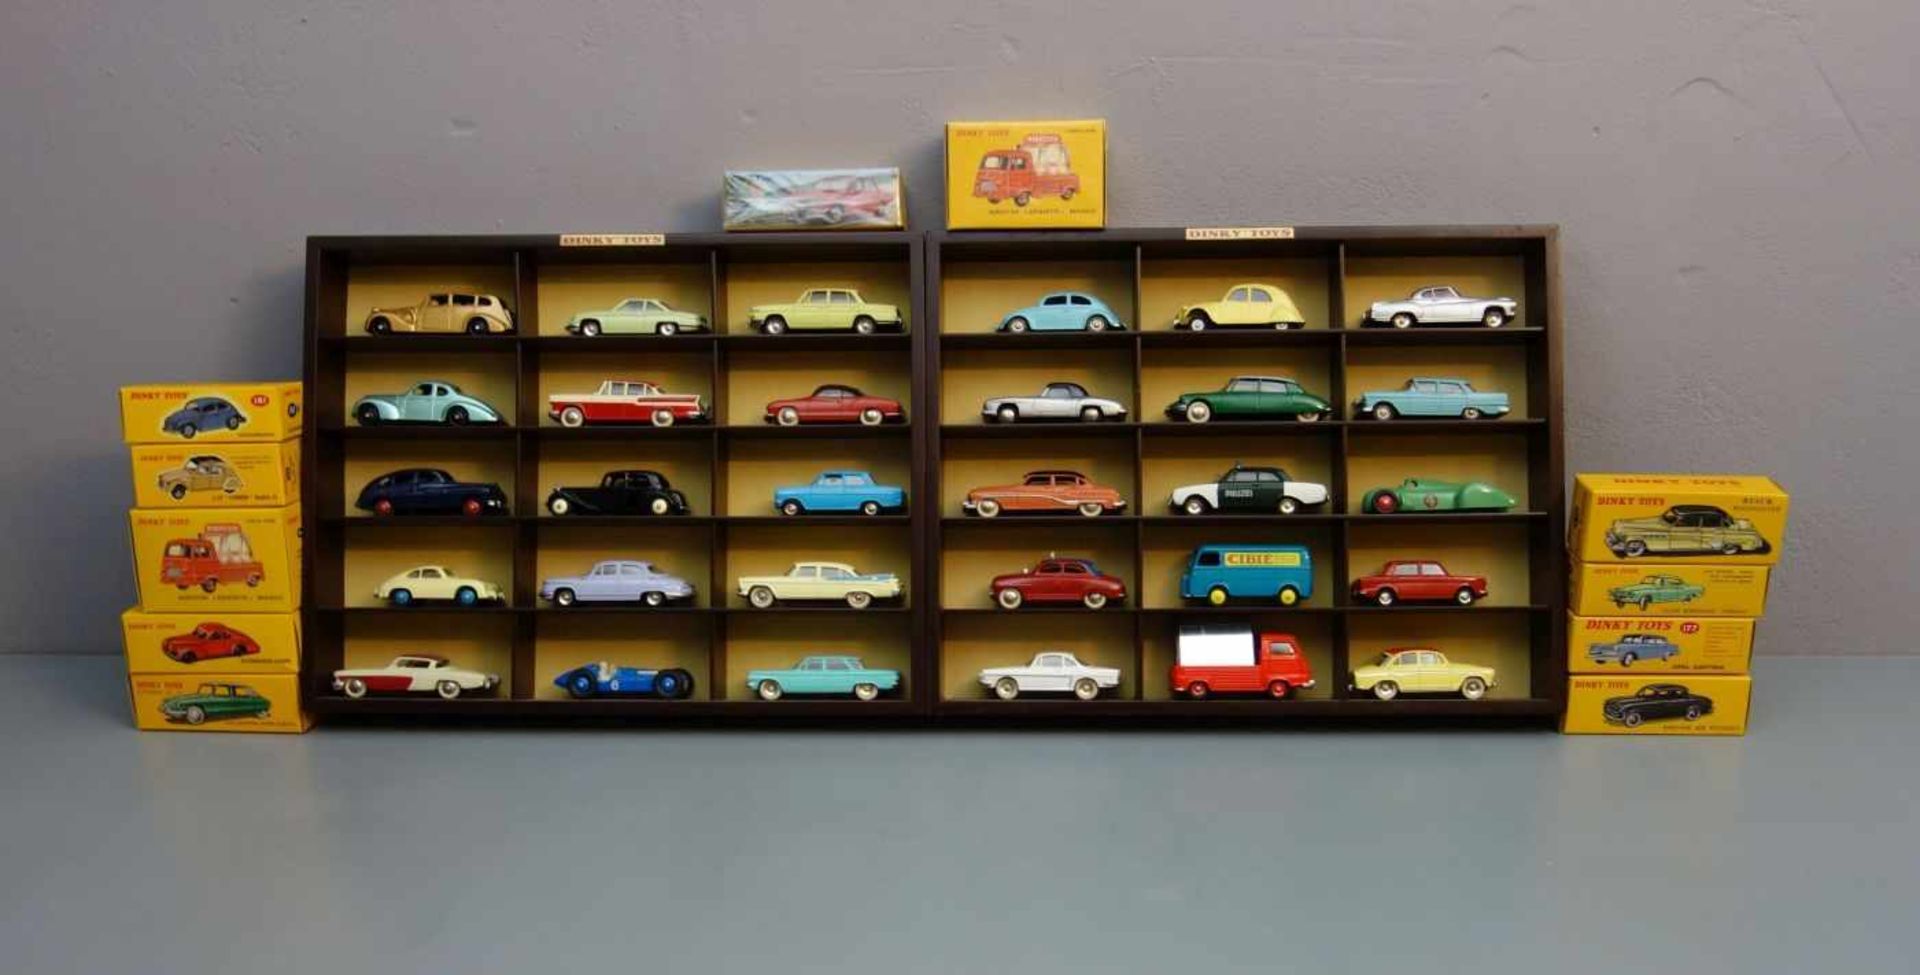 GROSSES KONVOLUT DINKY TOYS - SPIELZEUGAUTOS - 32 STÜCK / toy cars, 2000er Jahre. Insgesamt 32